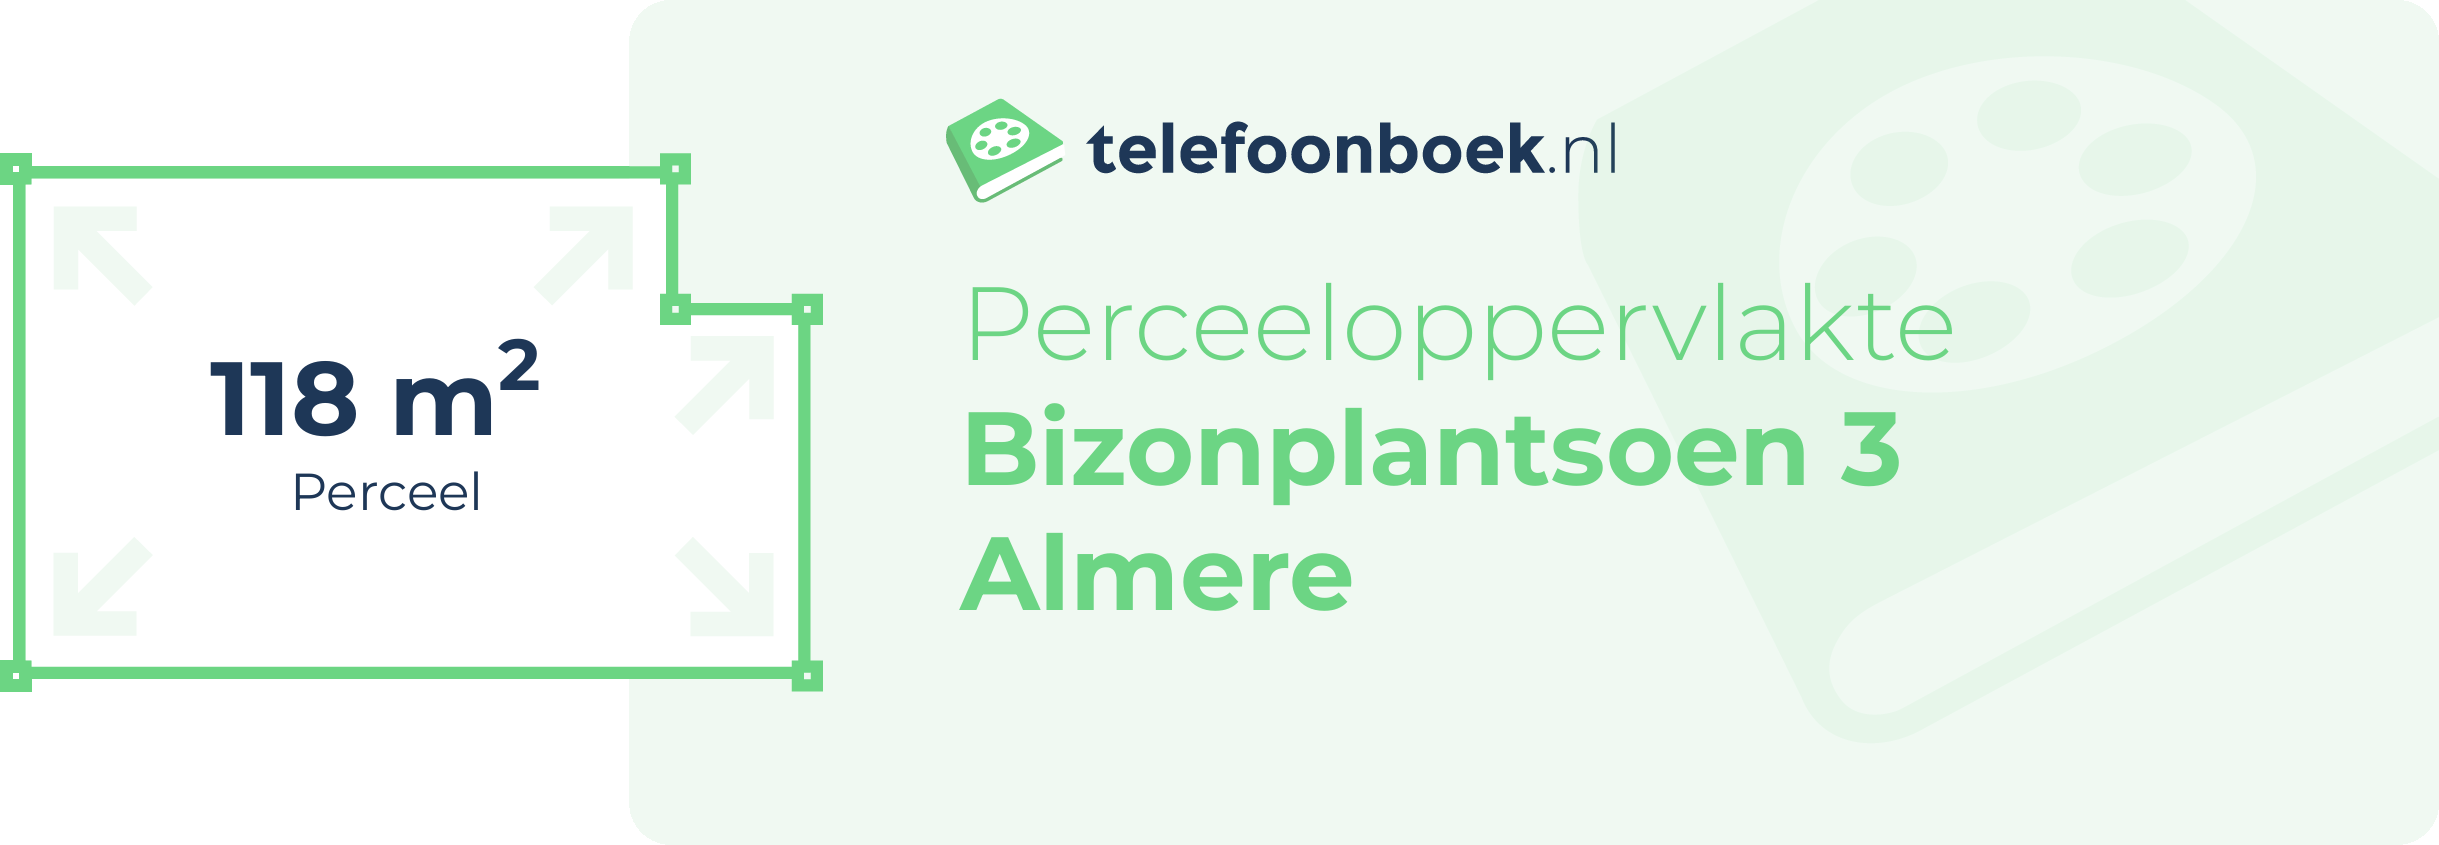 Perceeloppervlakte Bizonplantsoen 3 Almere